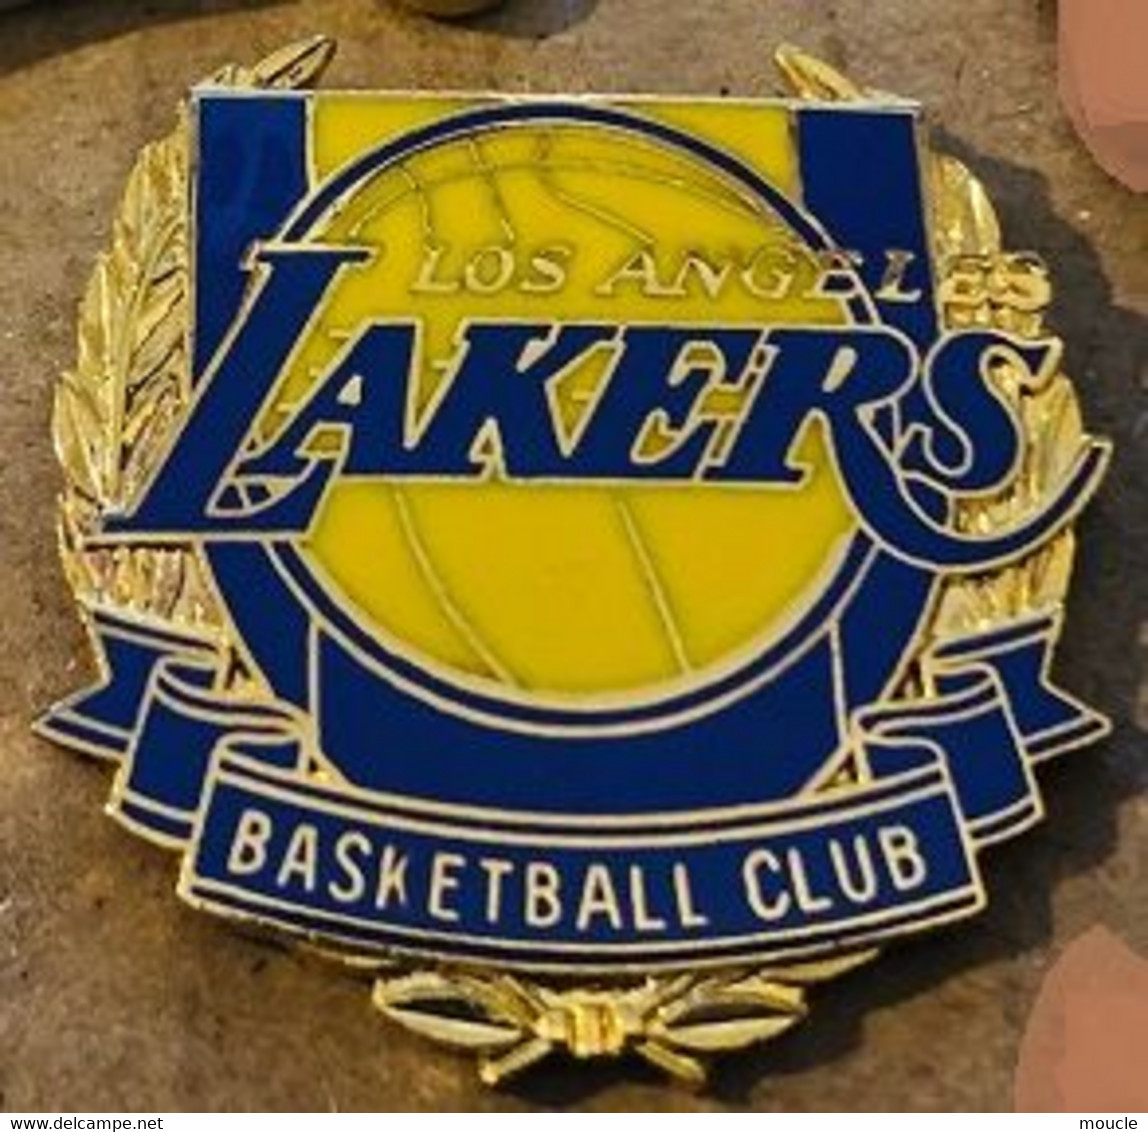 LOS ANGELES LAKERS - BASKEBALL CLUB - USA - ETATS UNIS D'AMERIQUE - NBA - UNITED STATES - LAURIERS - BALLON -    (14) - Pallacanestro